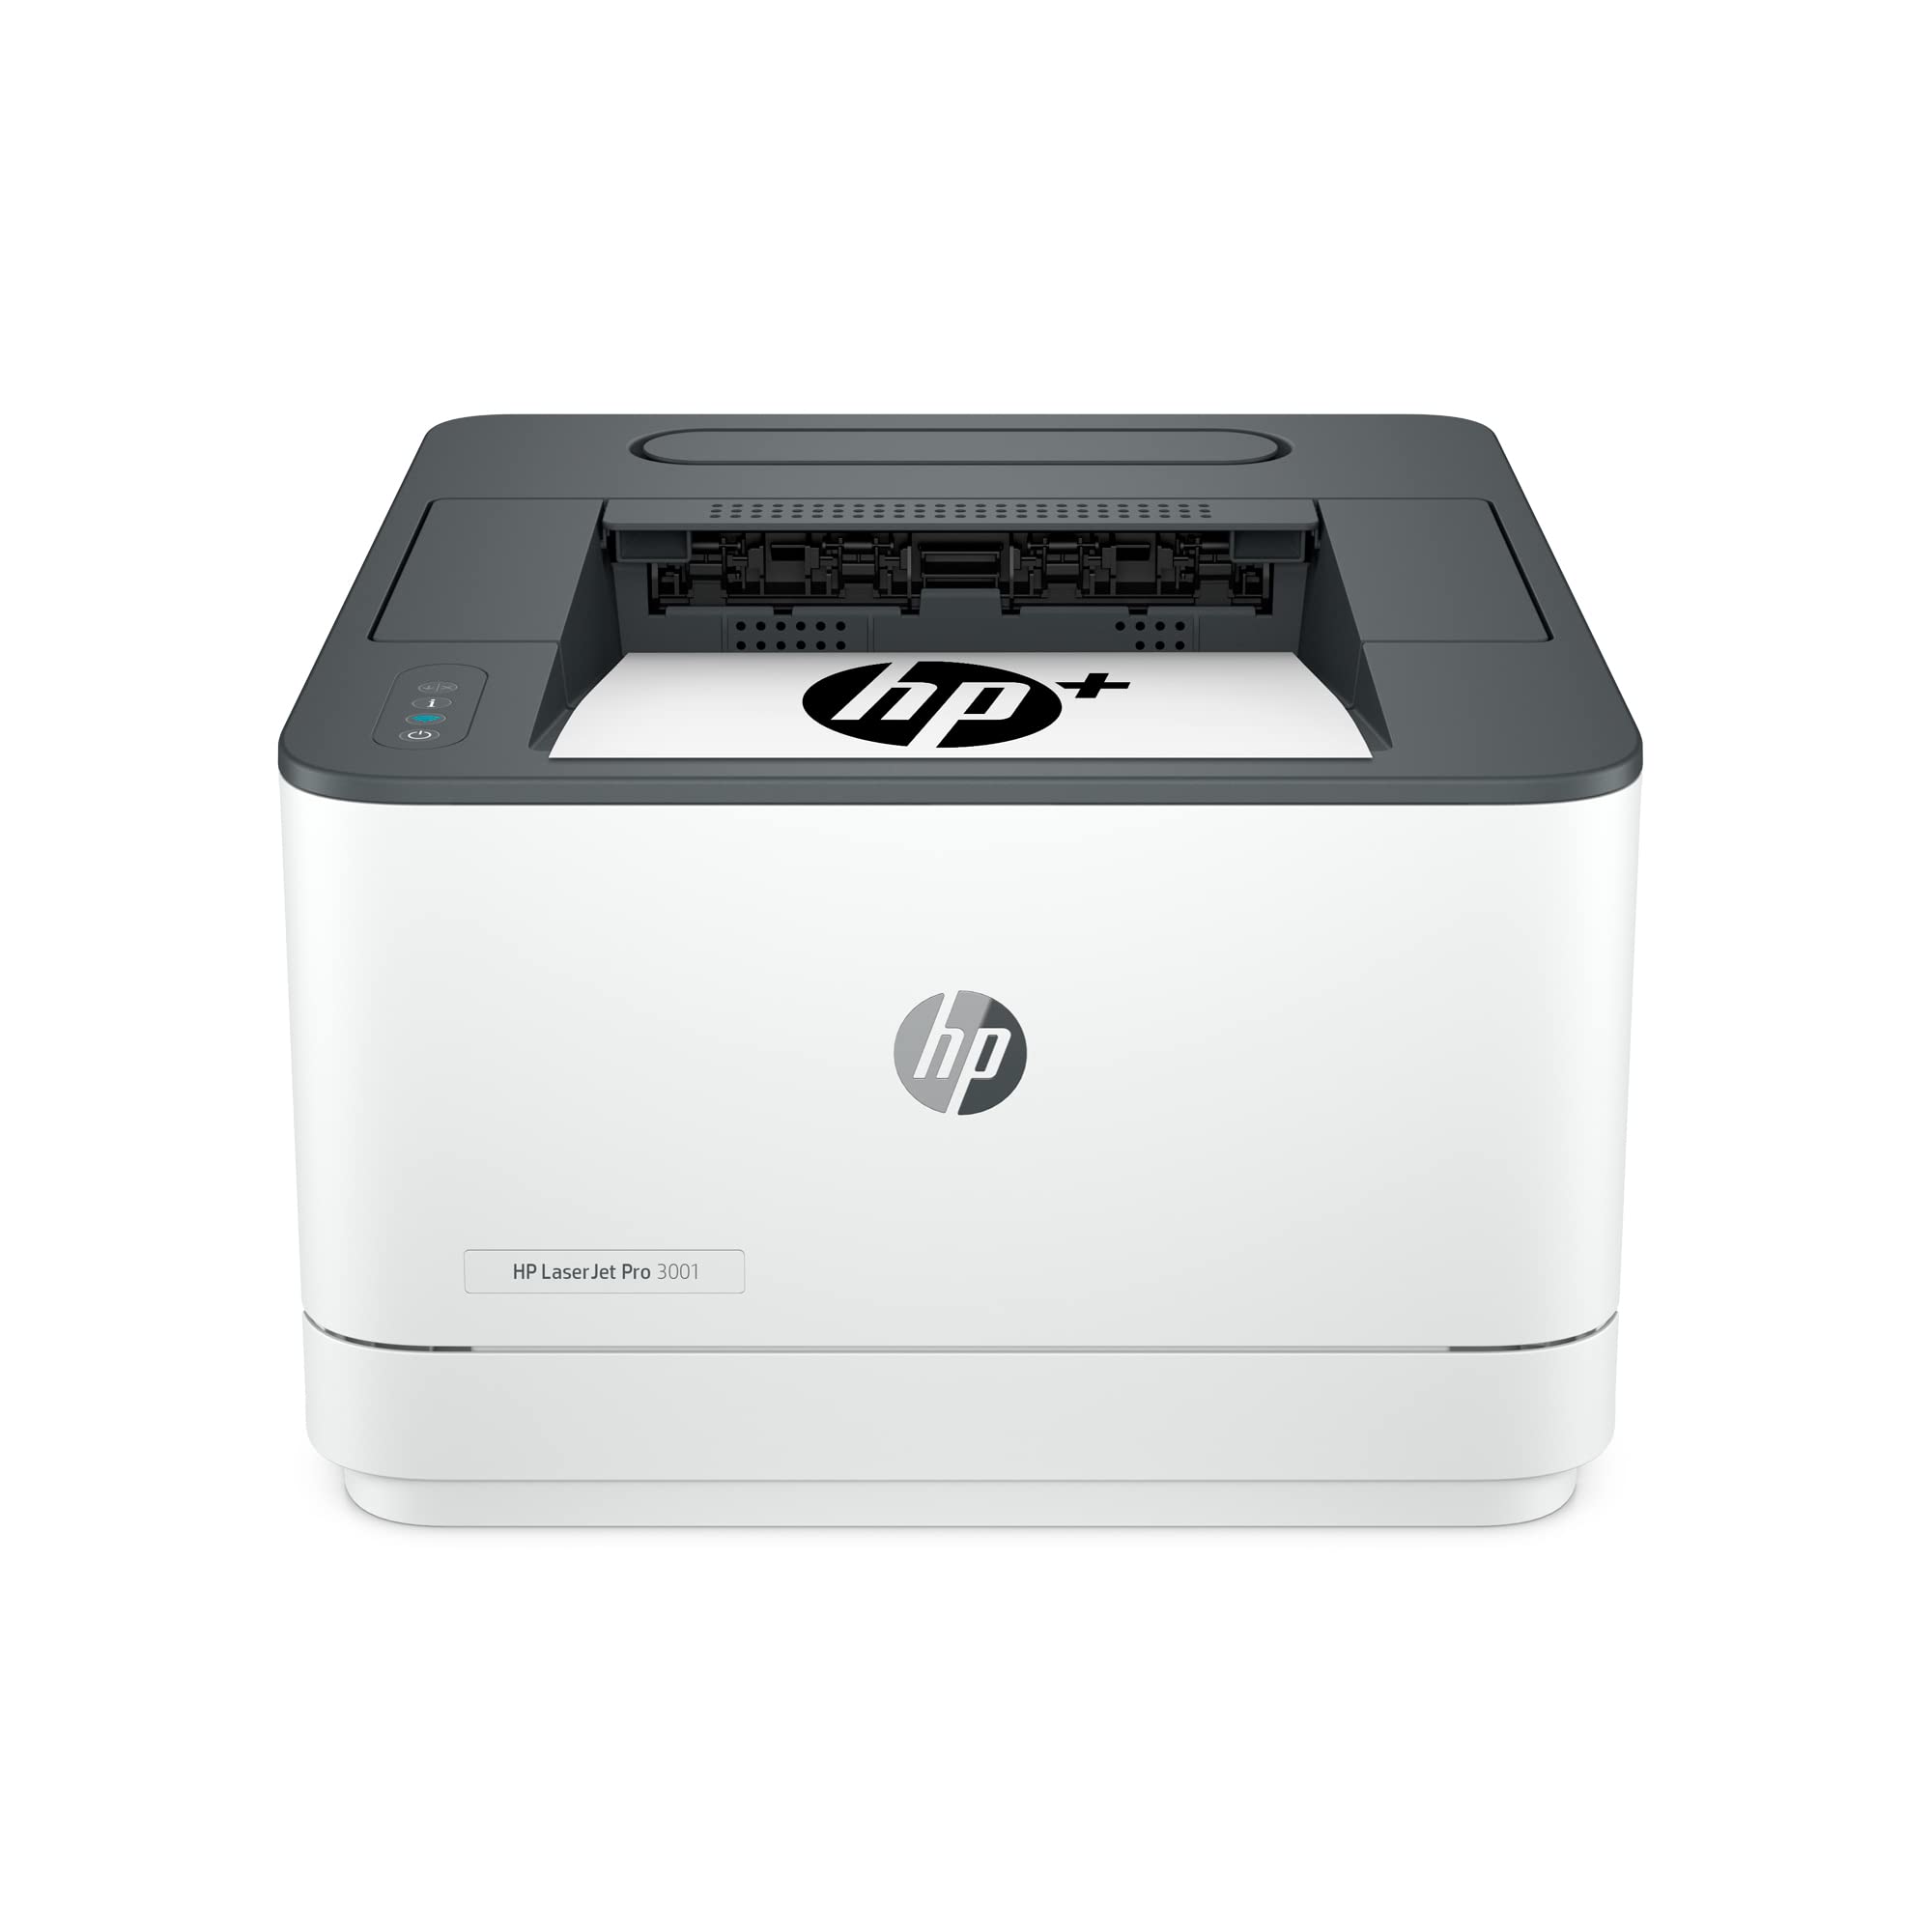 HP LaserJet Pro 3001dwe ワイヤレス白黒プリンター + スマート オフィス機能付き...